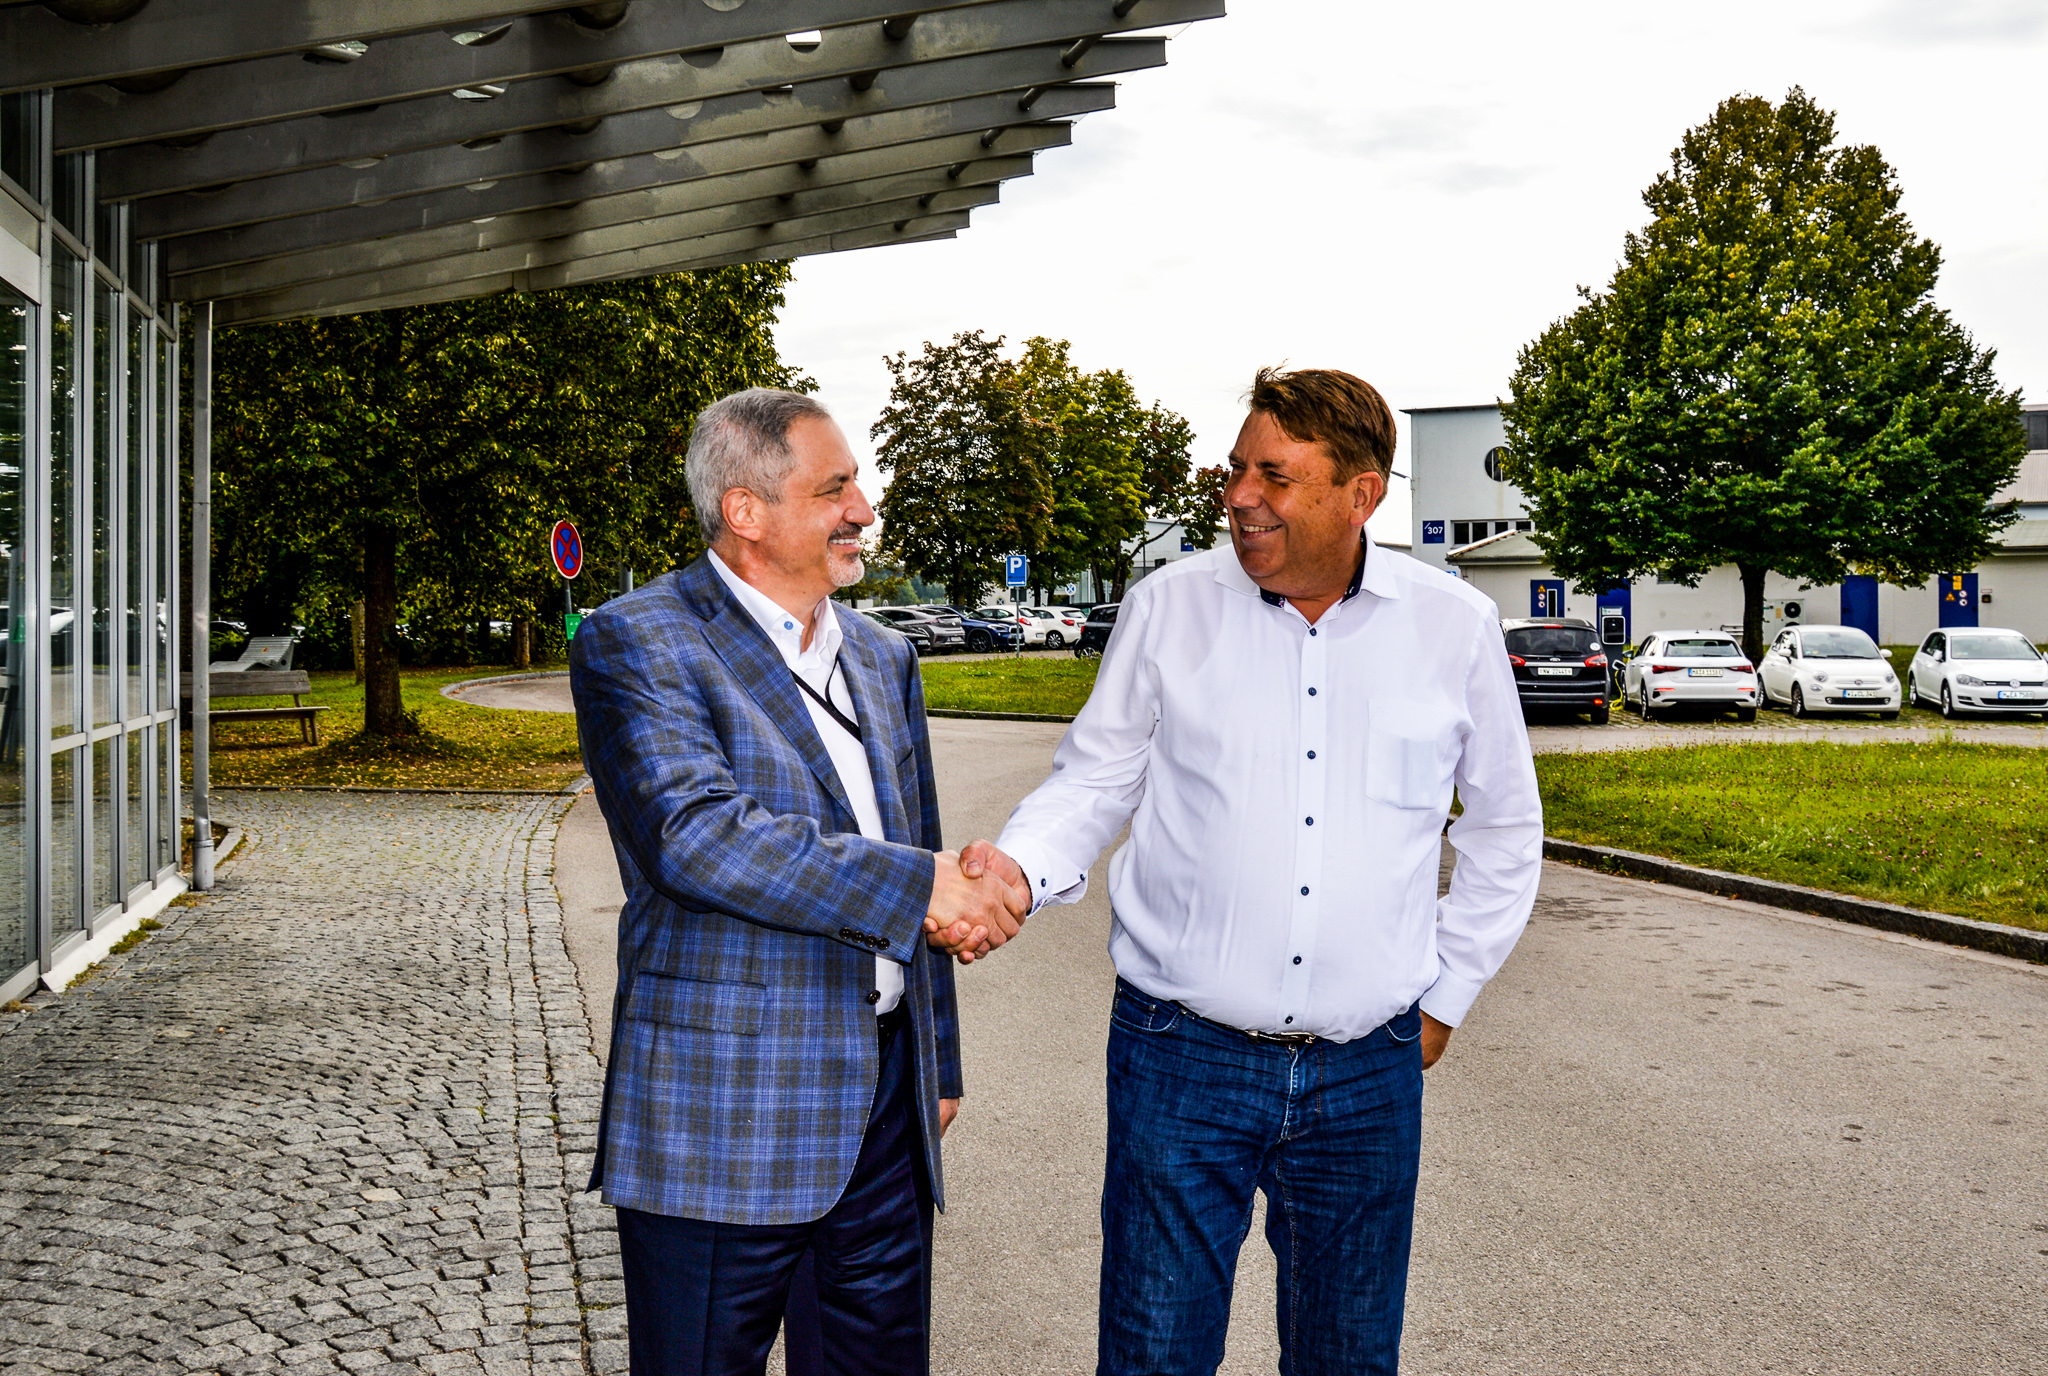 Anaqua 行政總裁 Bob Romeo 和 Lilium 知識產權負責人 Wulf Höflich 於 2021 年 9 月訪問 Lilium 總部時會面。